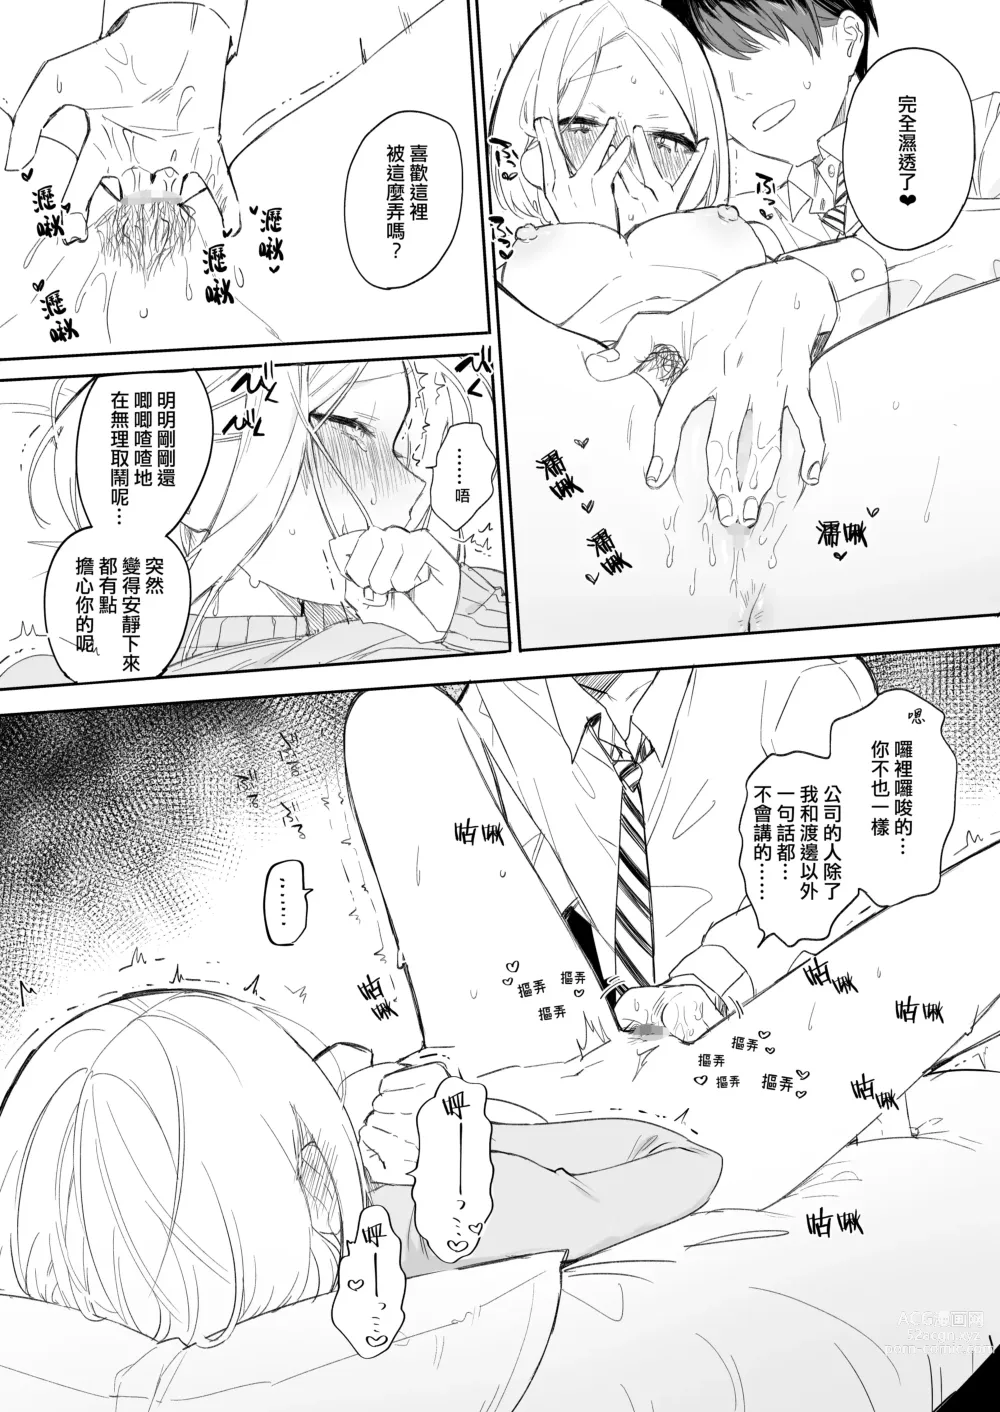 Page 17 of doujinshi Yabuki Senpai Ha Nome Nai 精明能干的矢吹前輩喝不了酒